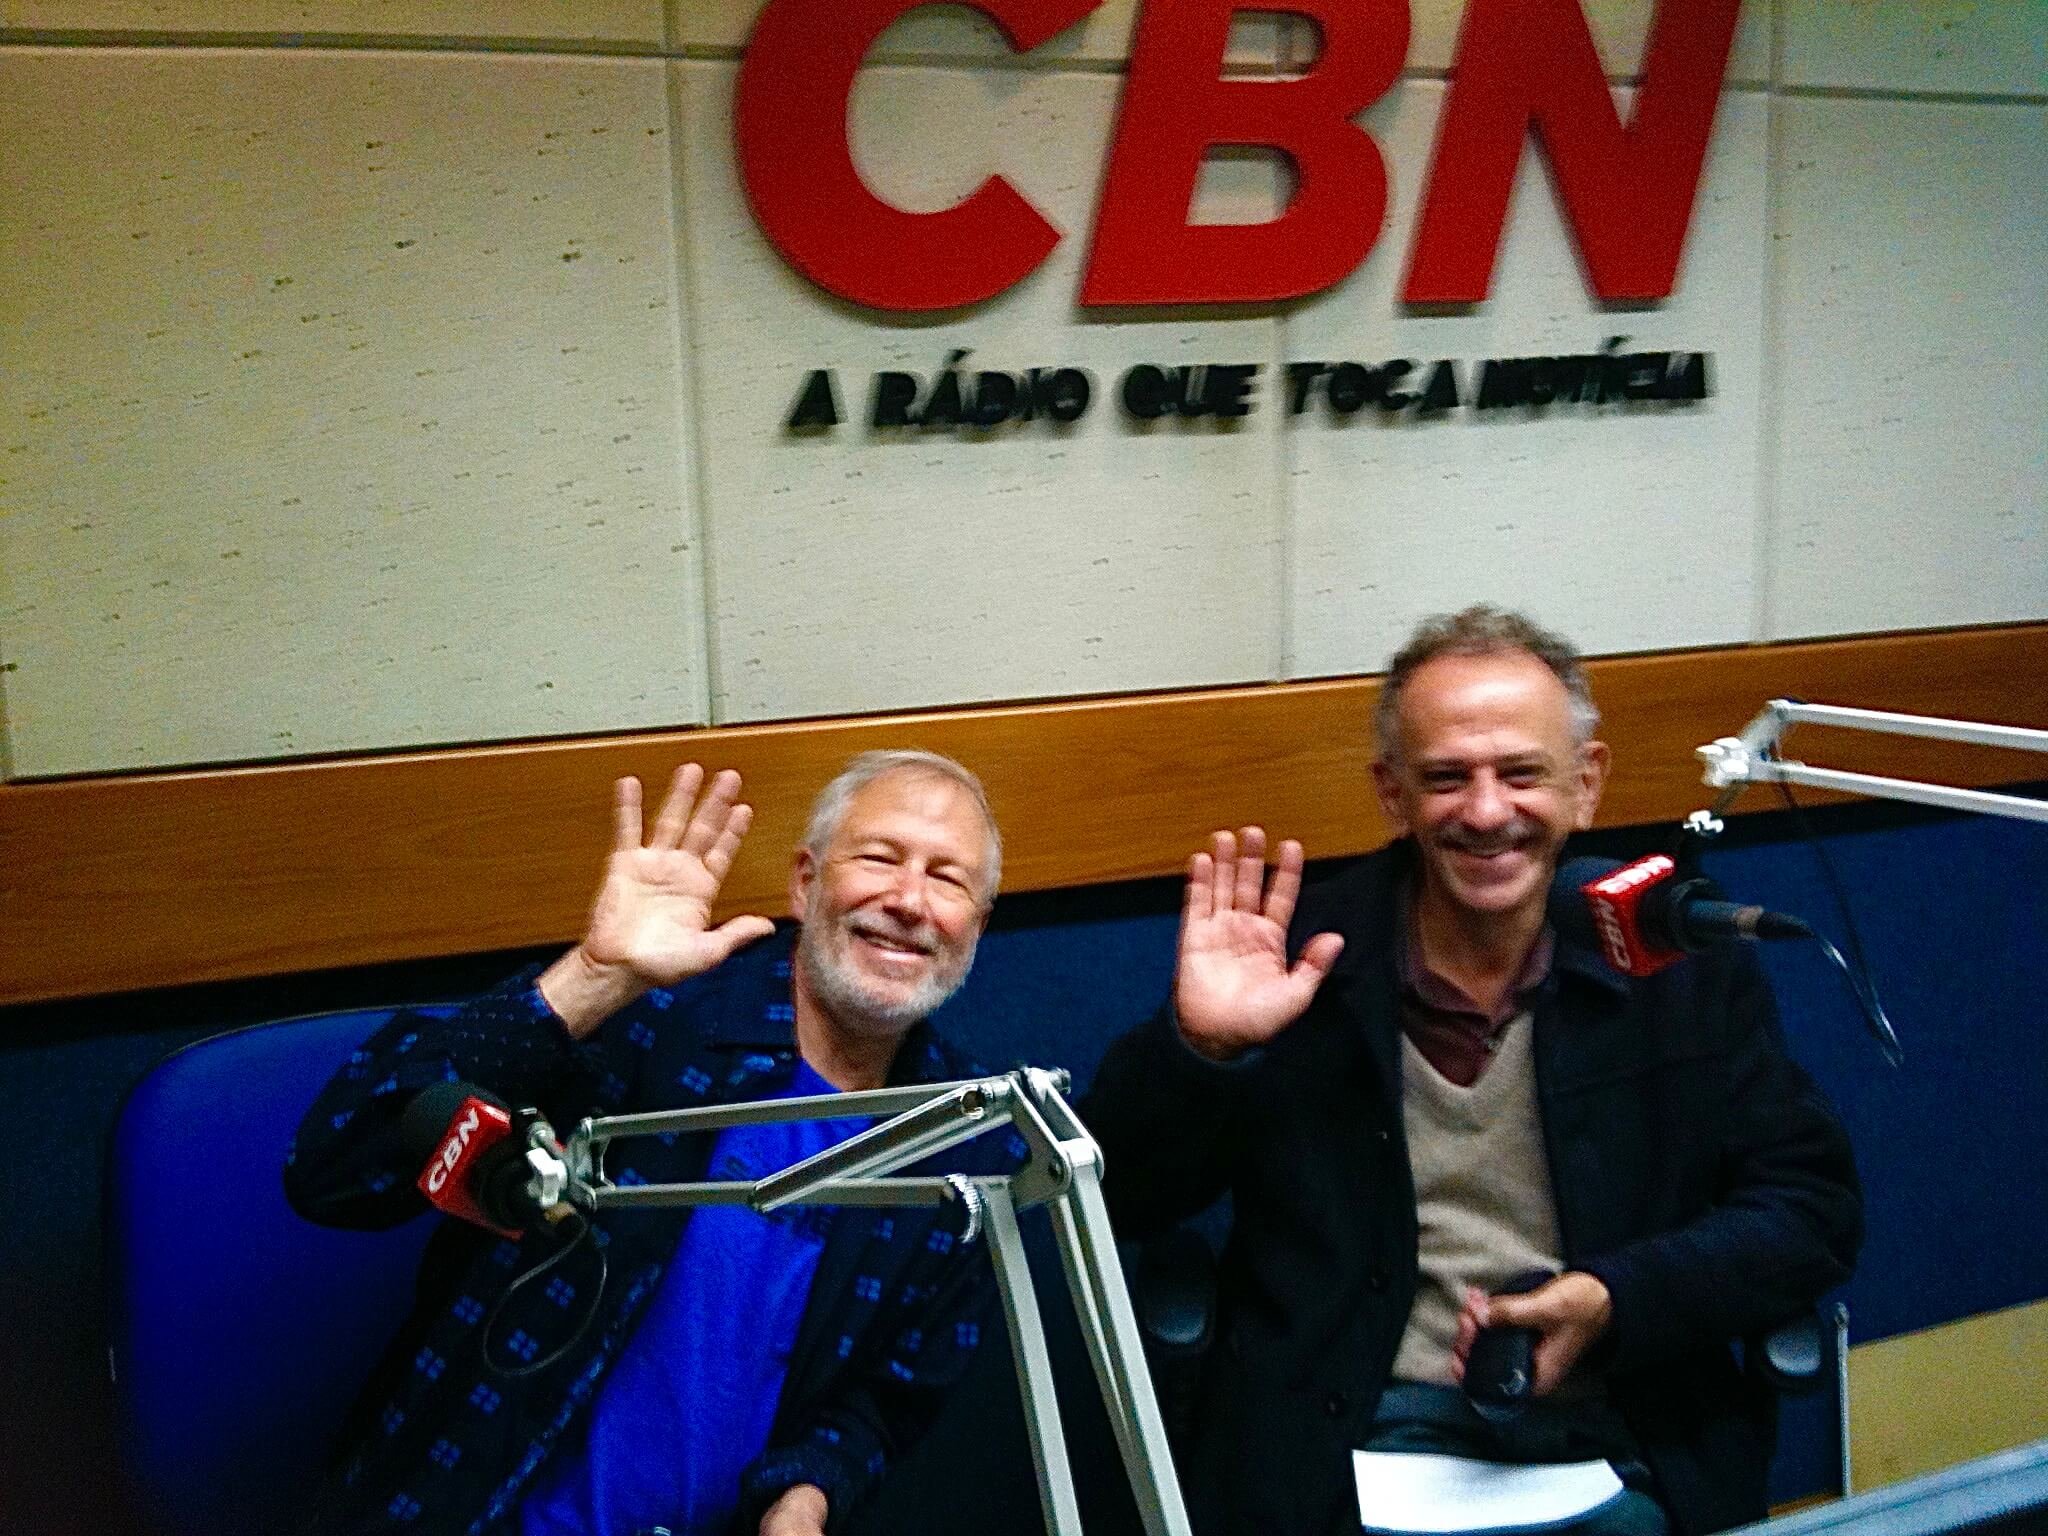 Brazilian Radio and TV interviews with Maestro Maluf